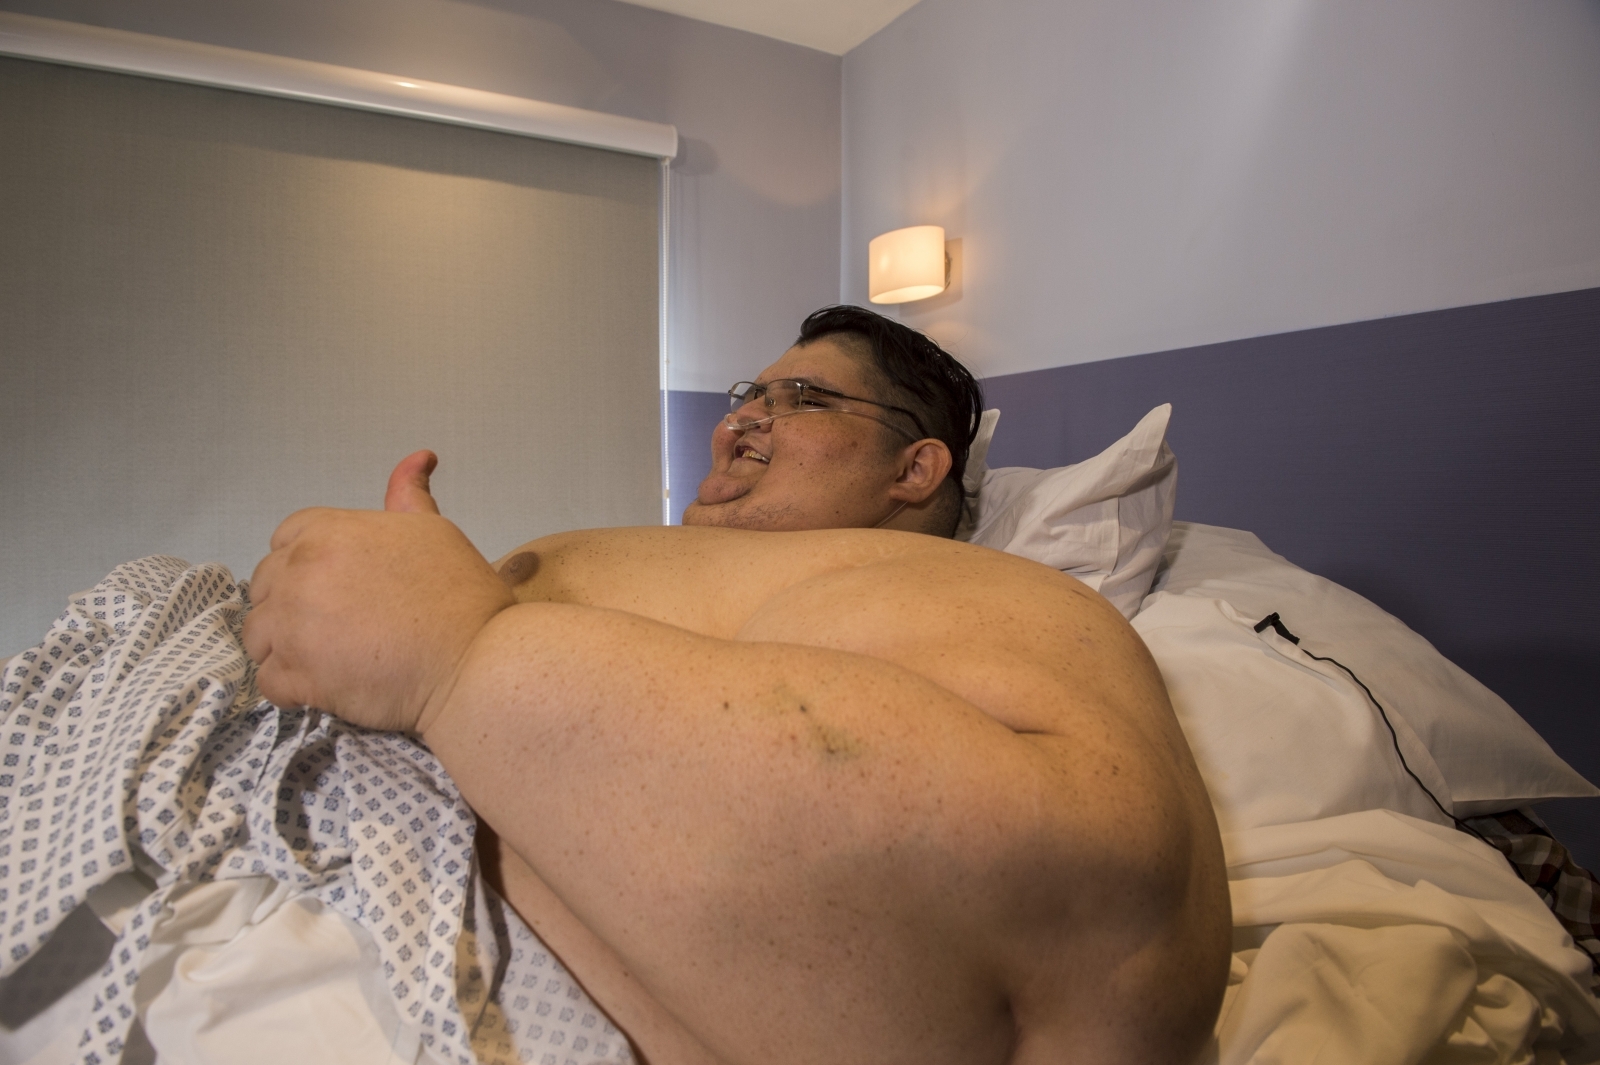 Watch 'World's fattest man' undergo surgery to reduce 95 sto...